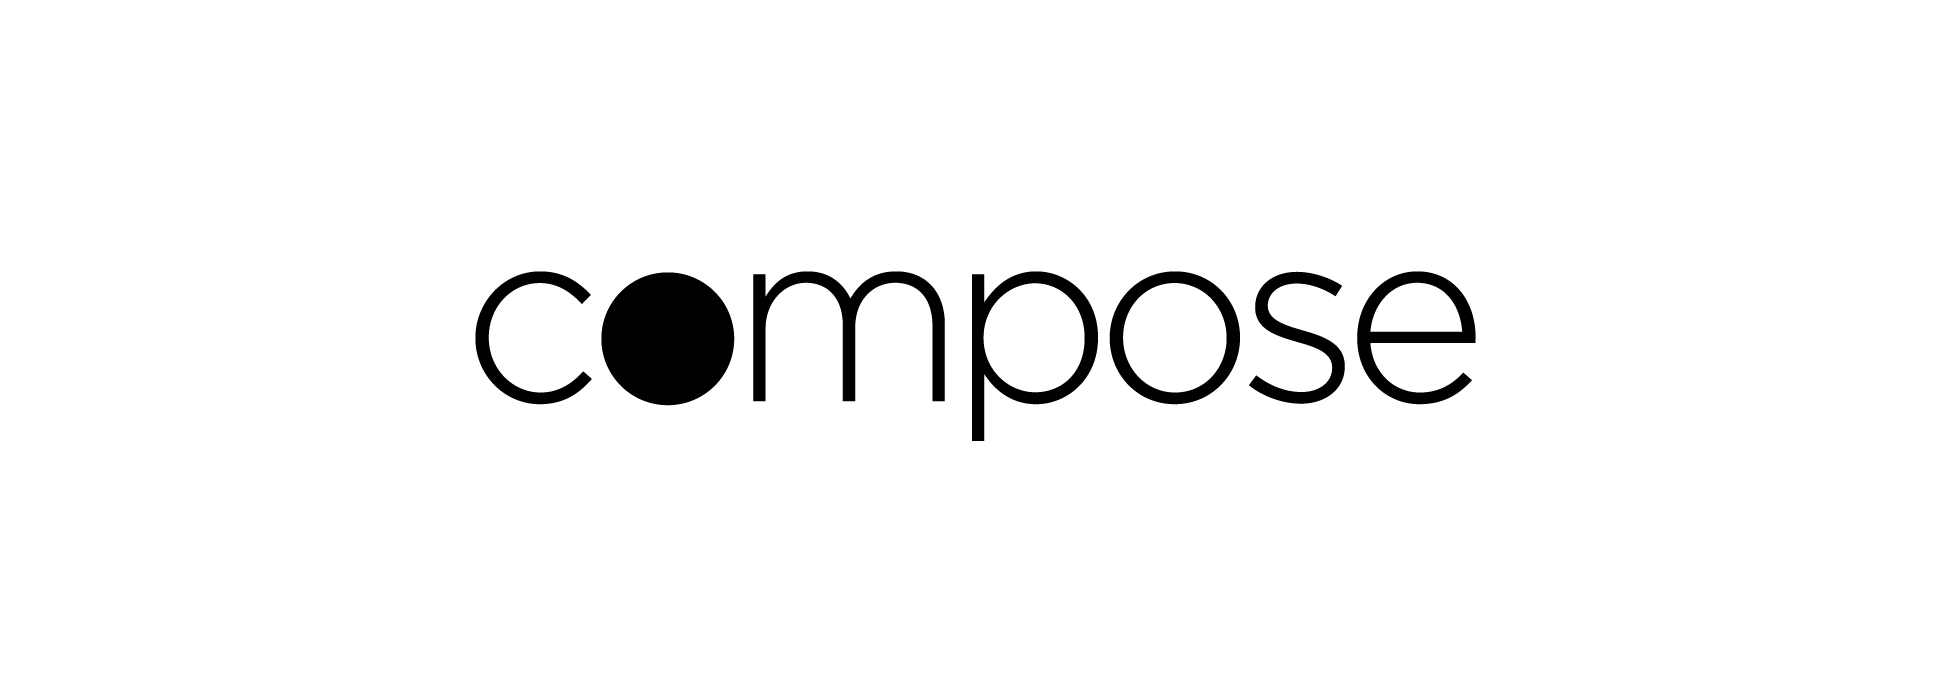 compose-logo-anim-web-1960x380